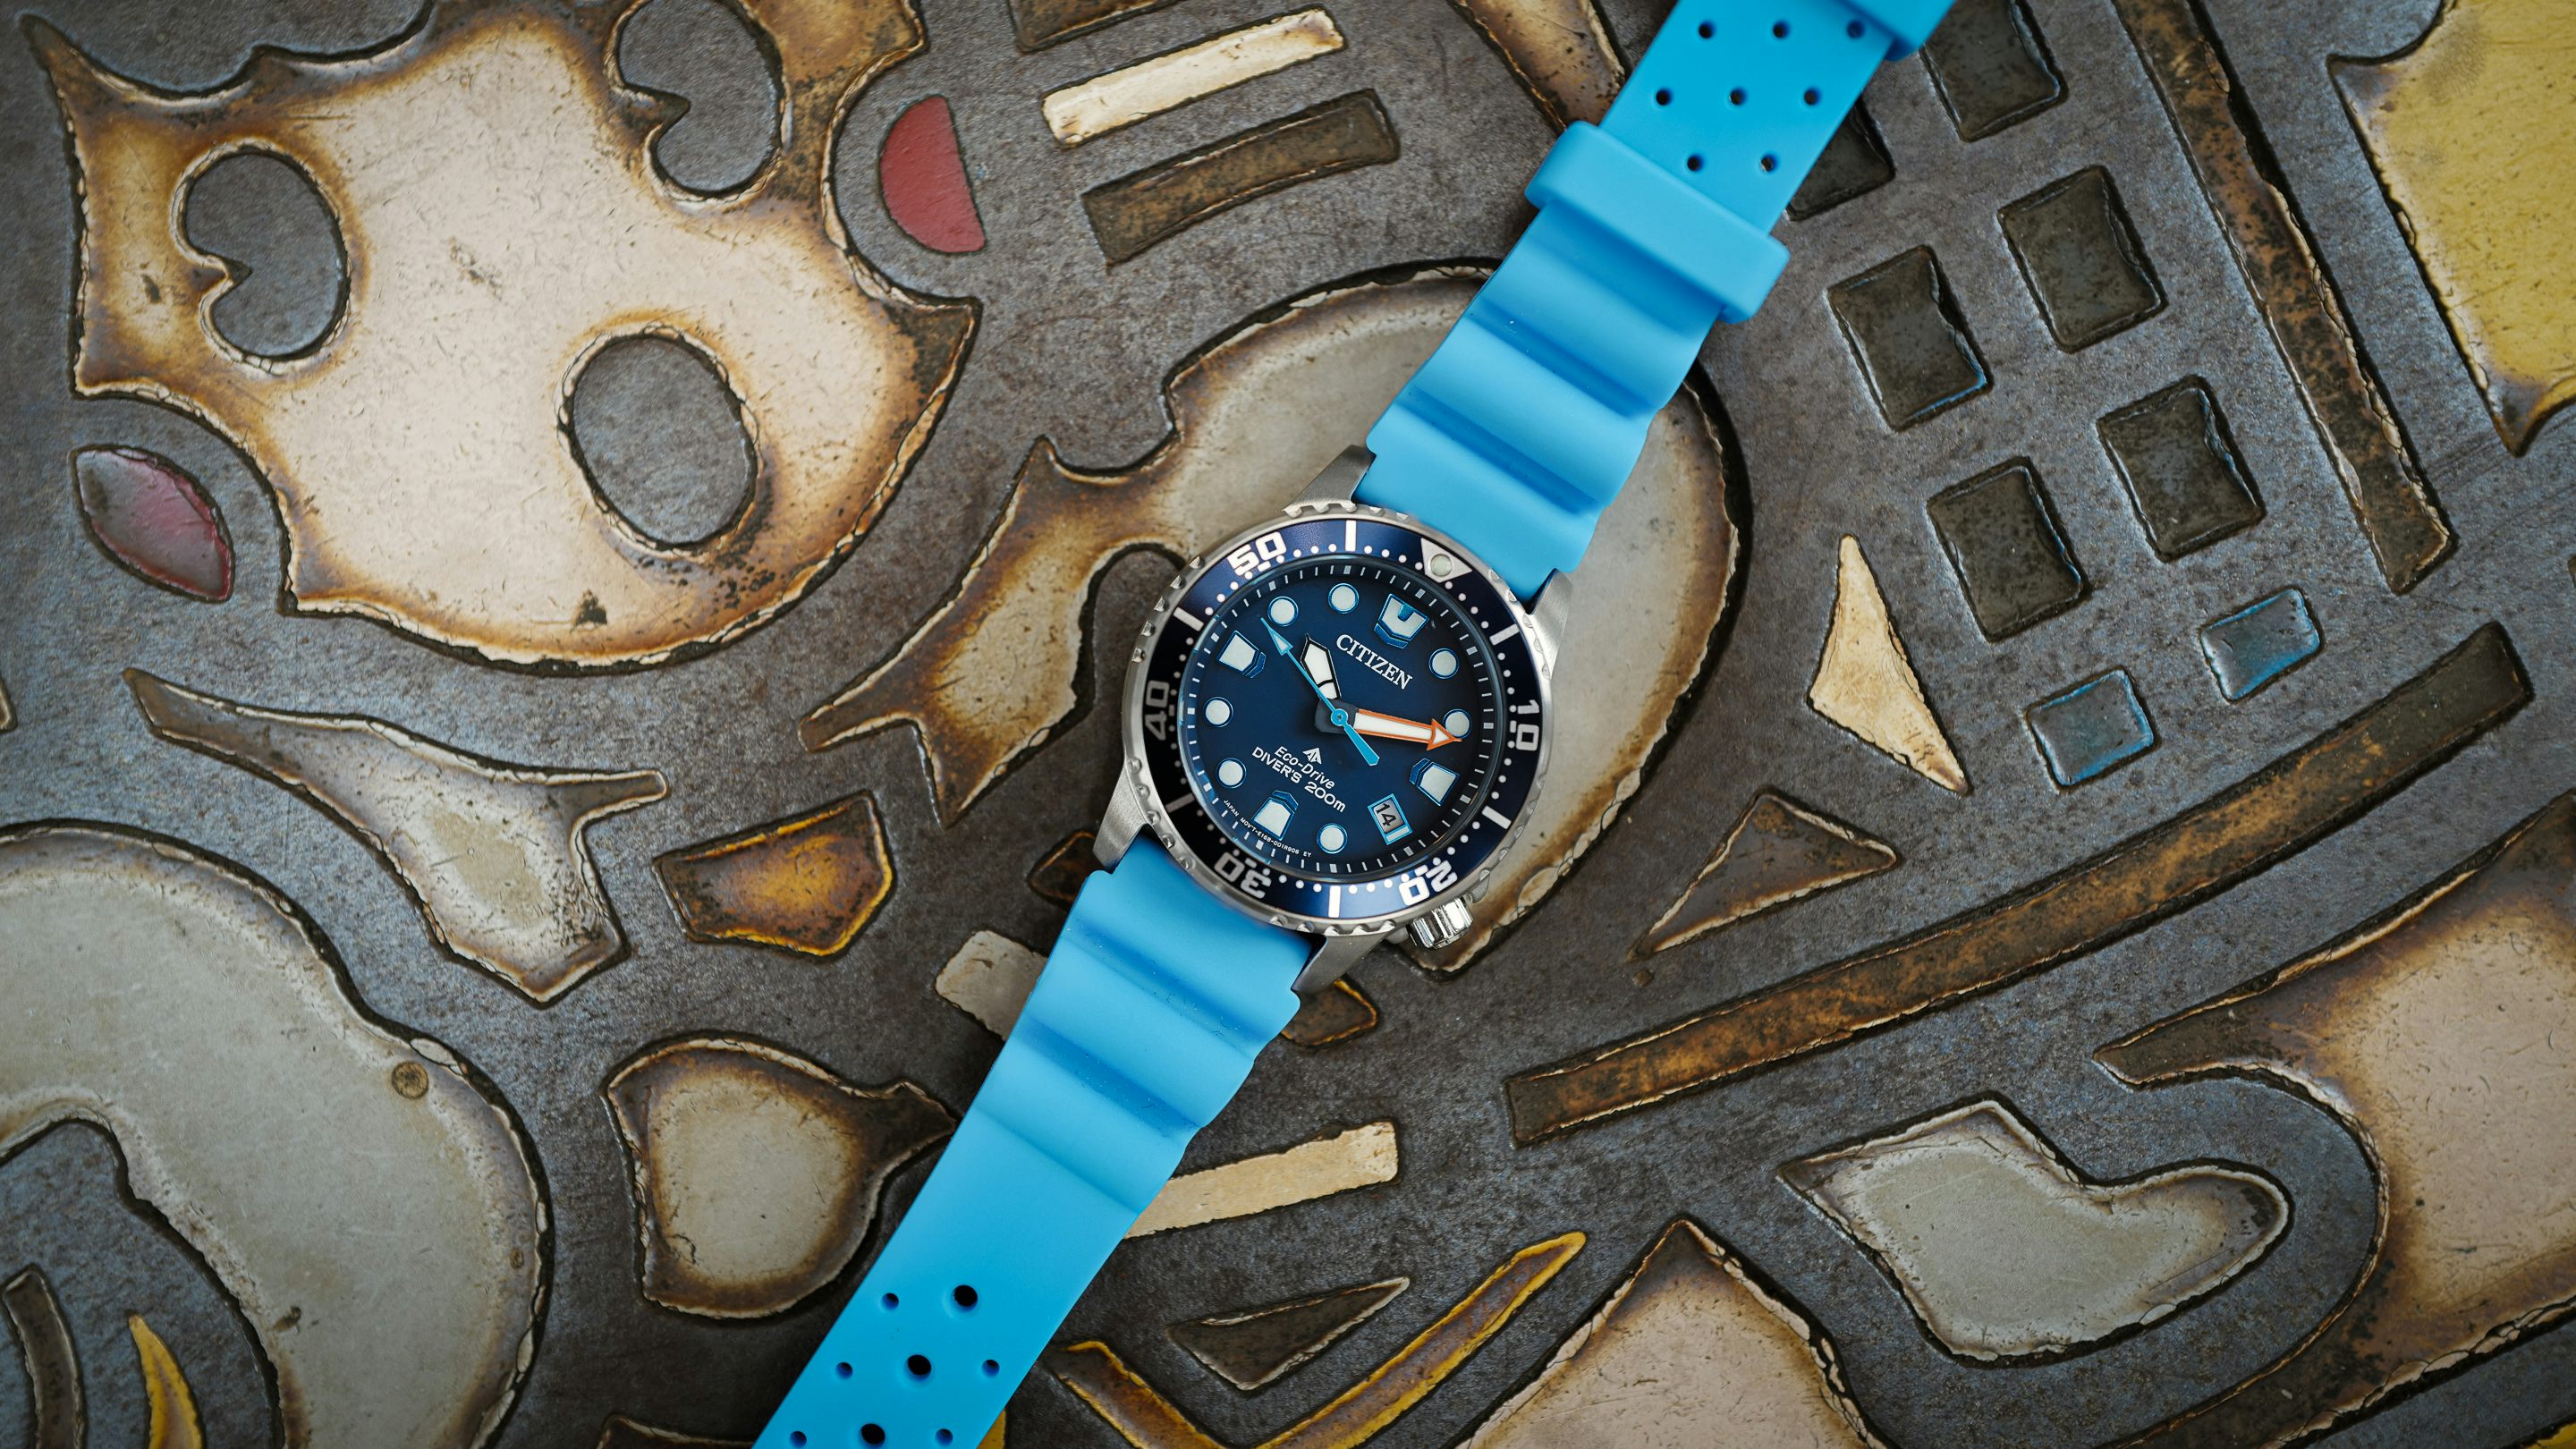 BUY Citizen Promaster Eco-Drive Blue Dial Diver Watch BN0165-55L